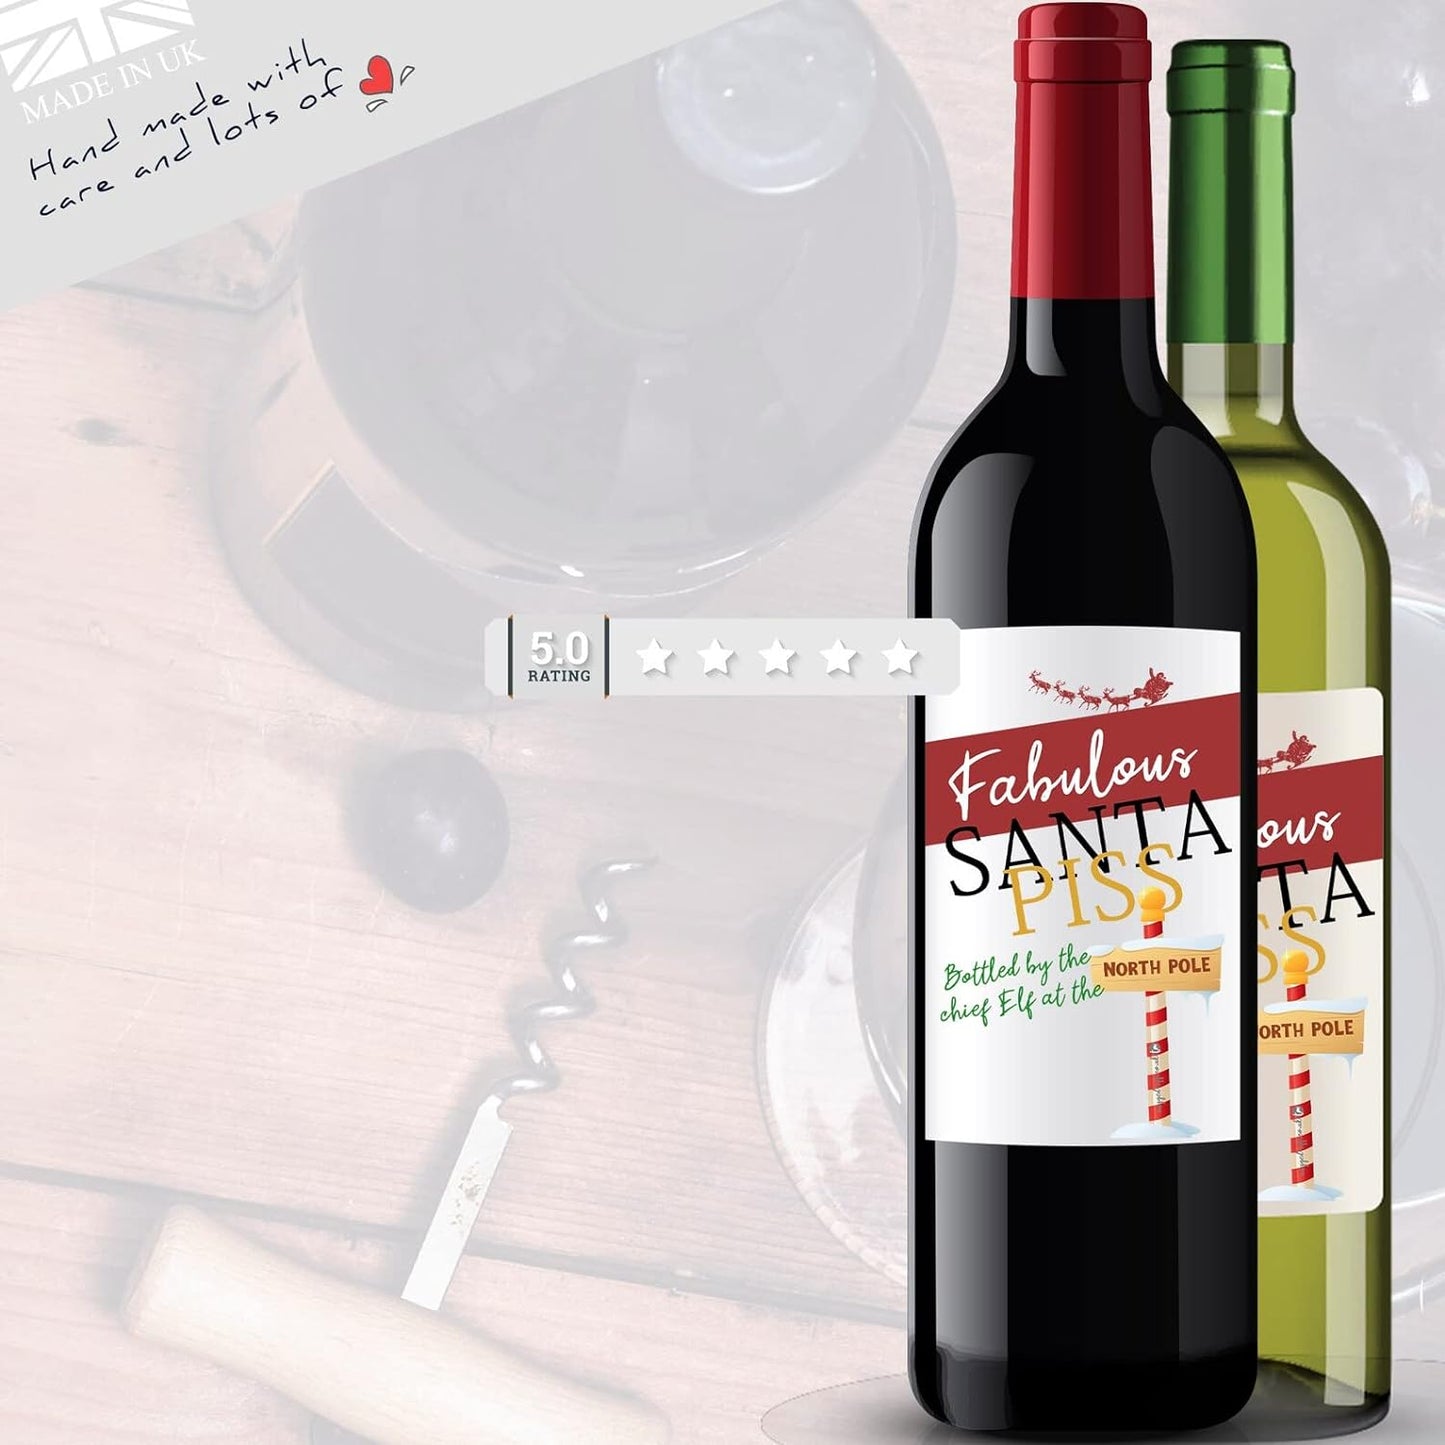 Cheap Secret Santa gift under 5 - 3x Santa P!ss Wine Bottle Labels Funny Joke Christmas Gifts